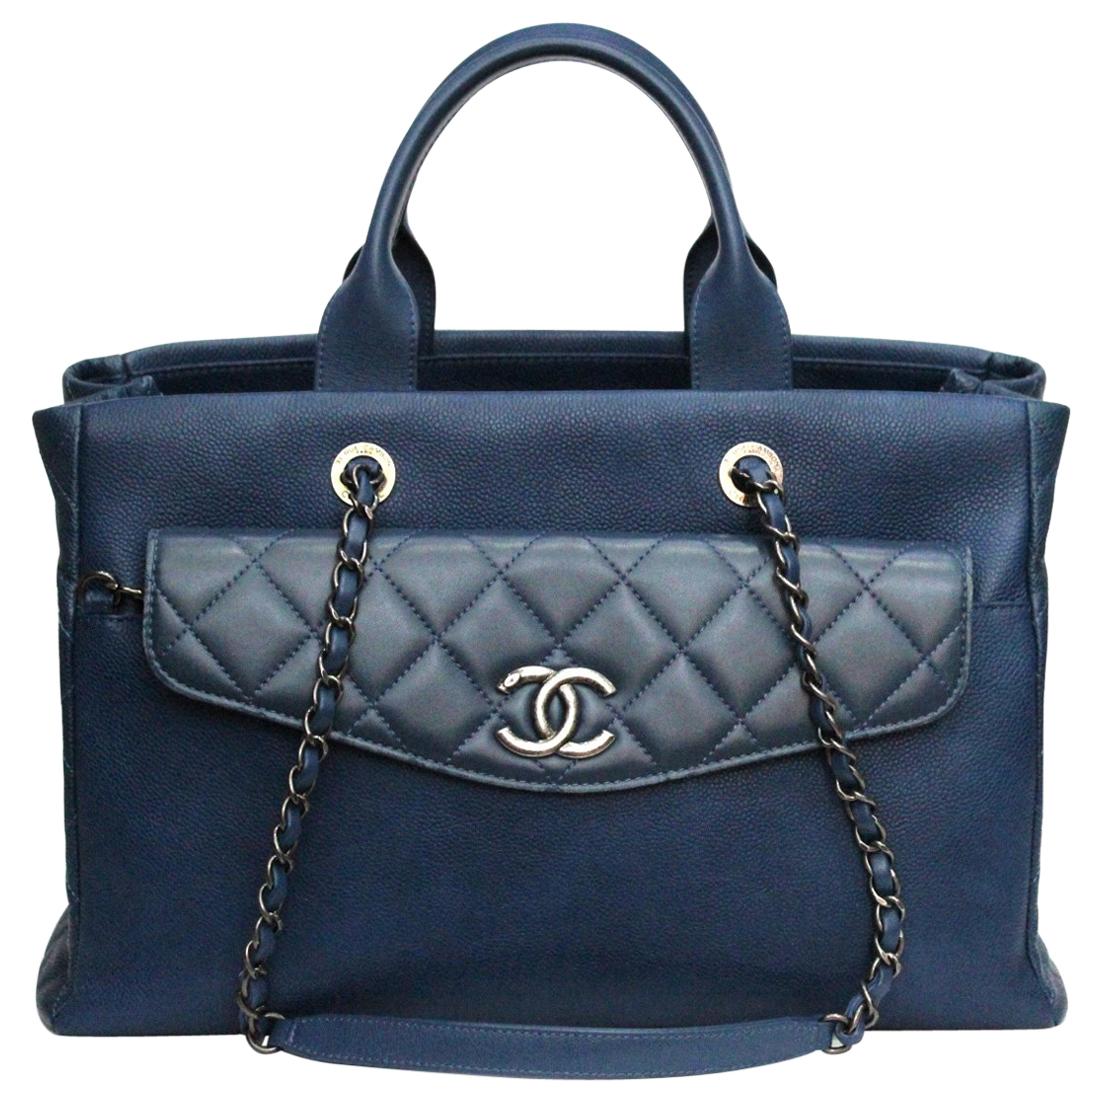 Chanel Blu Navy Leather Tote Shopper Bag